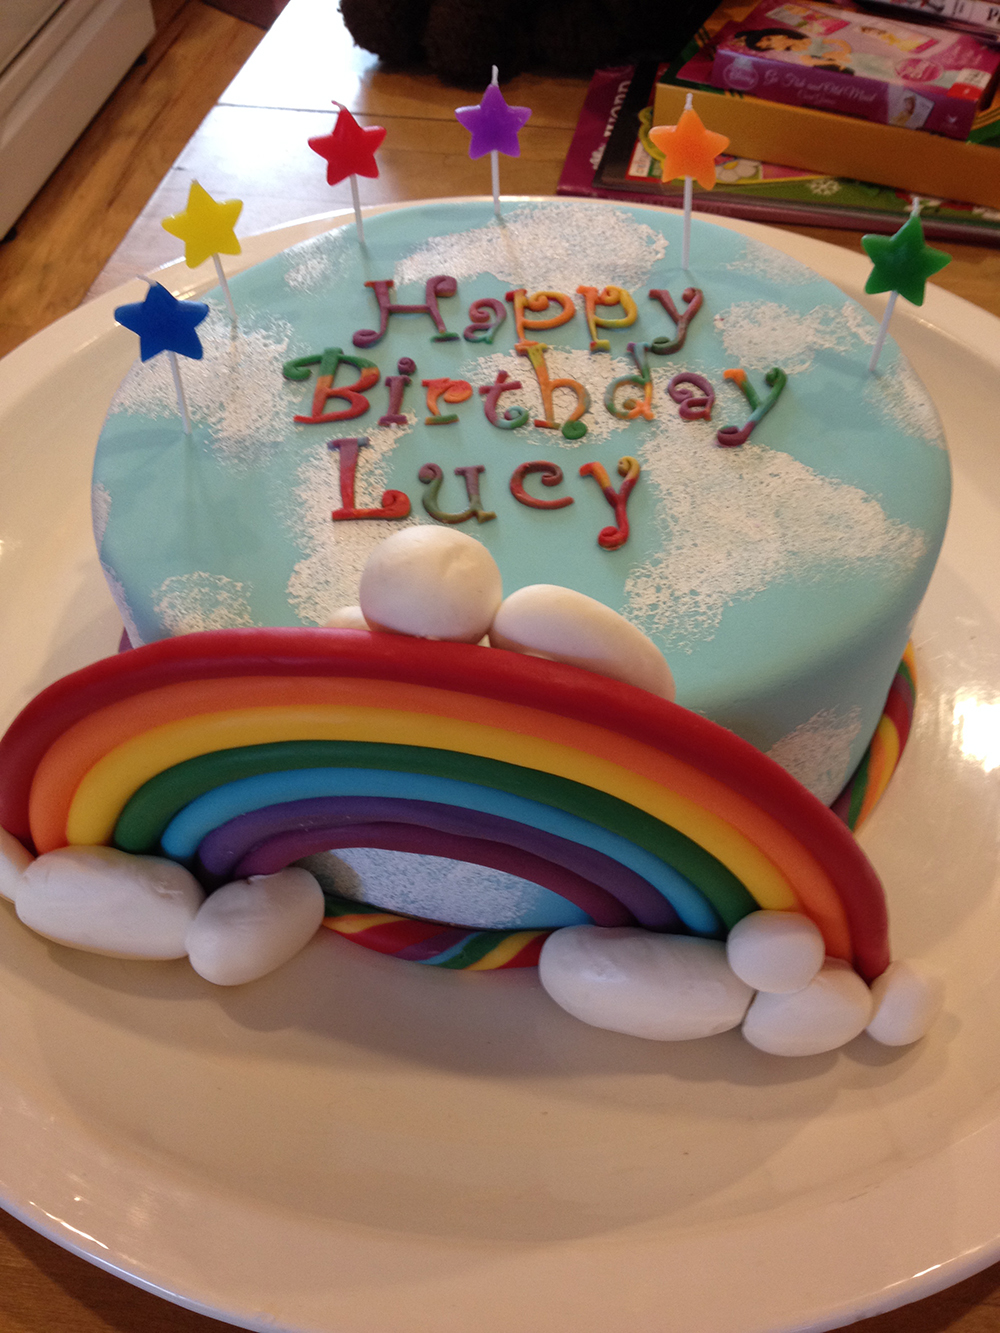 lucy+cake.JPG